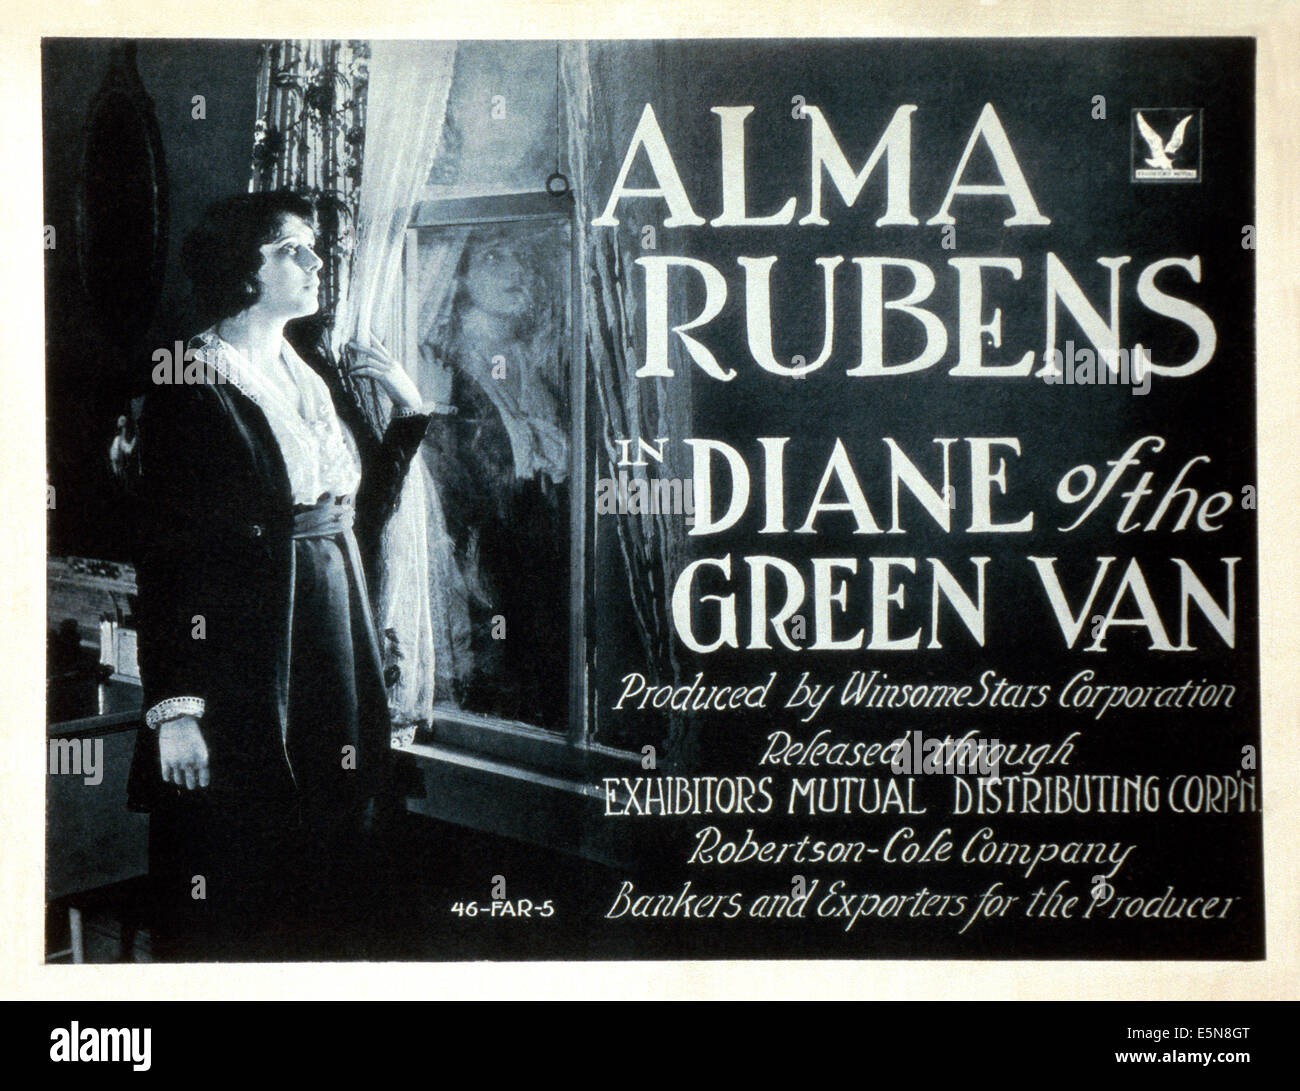 DIANE OF THE GREEN VAN, Alma Reubens, 1919 Stock Photo